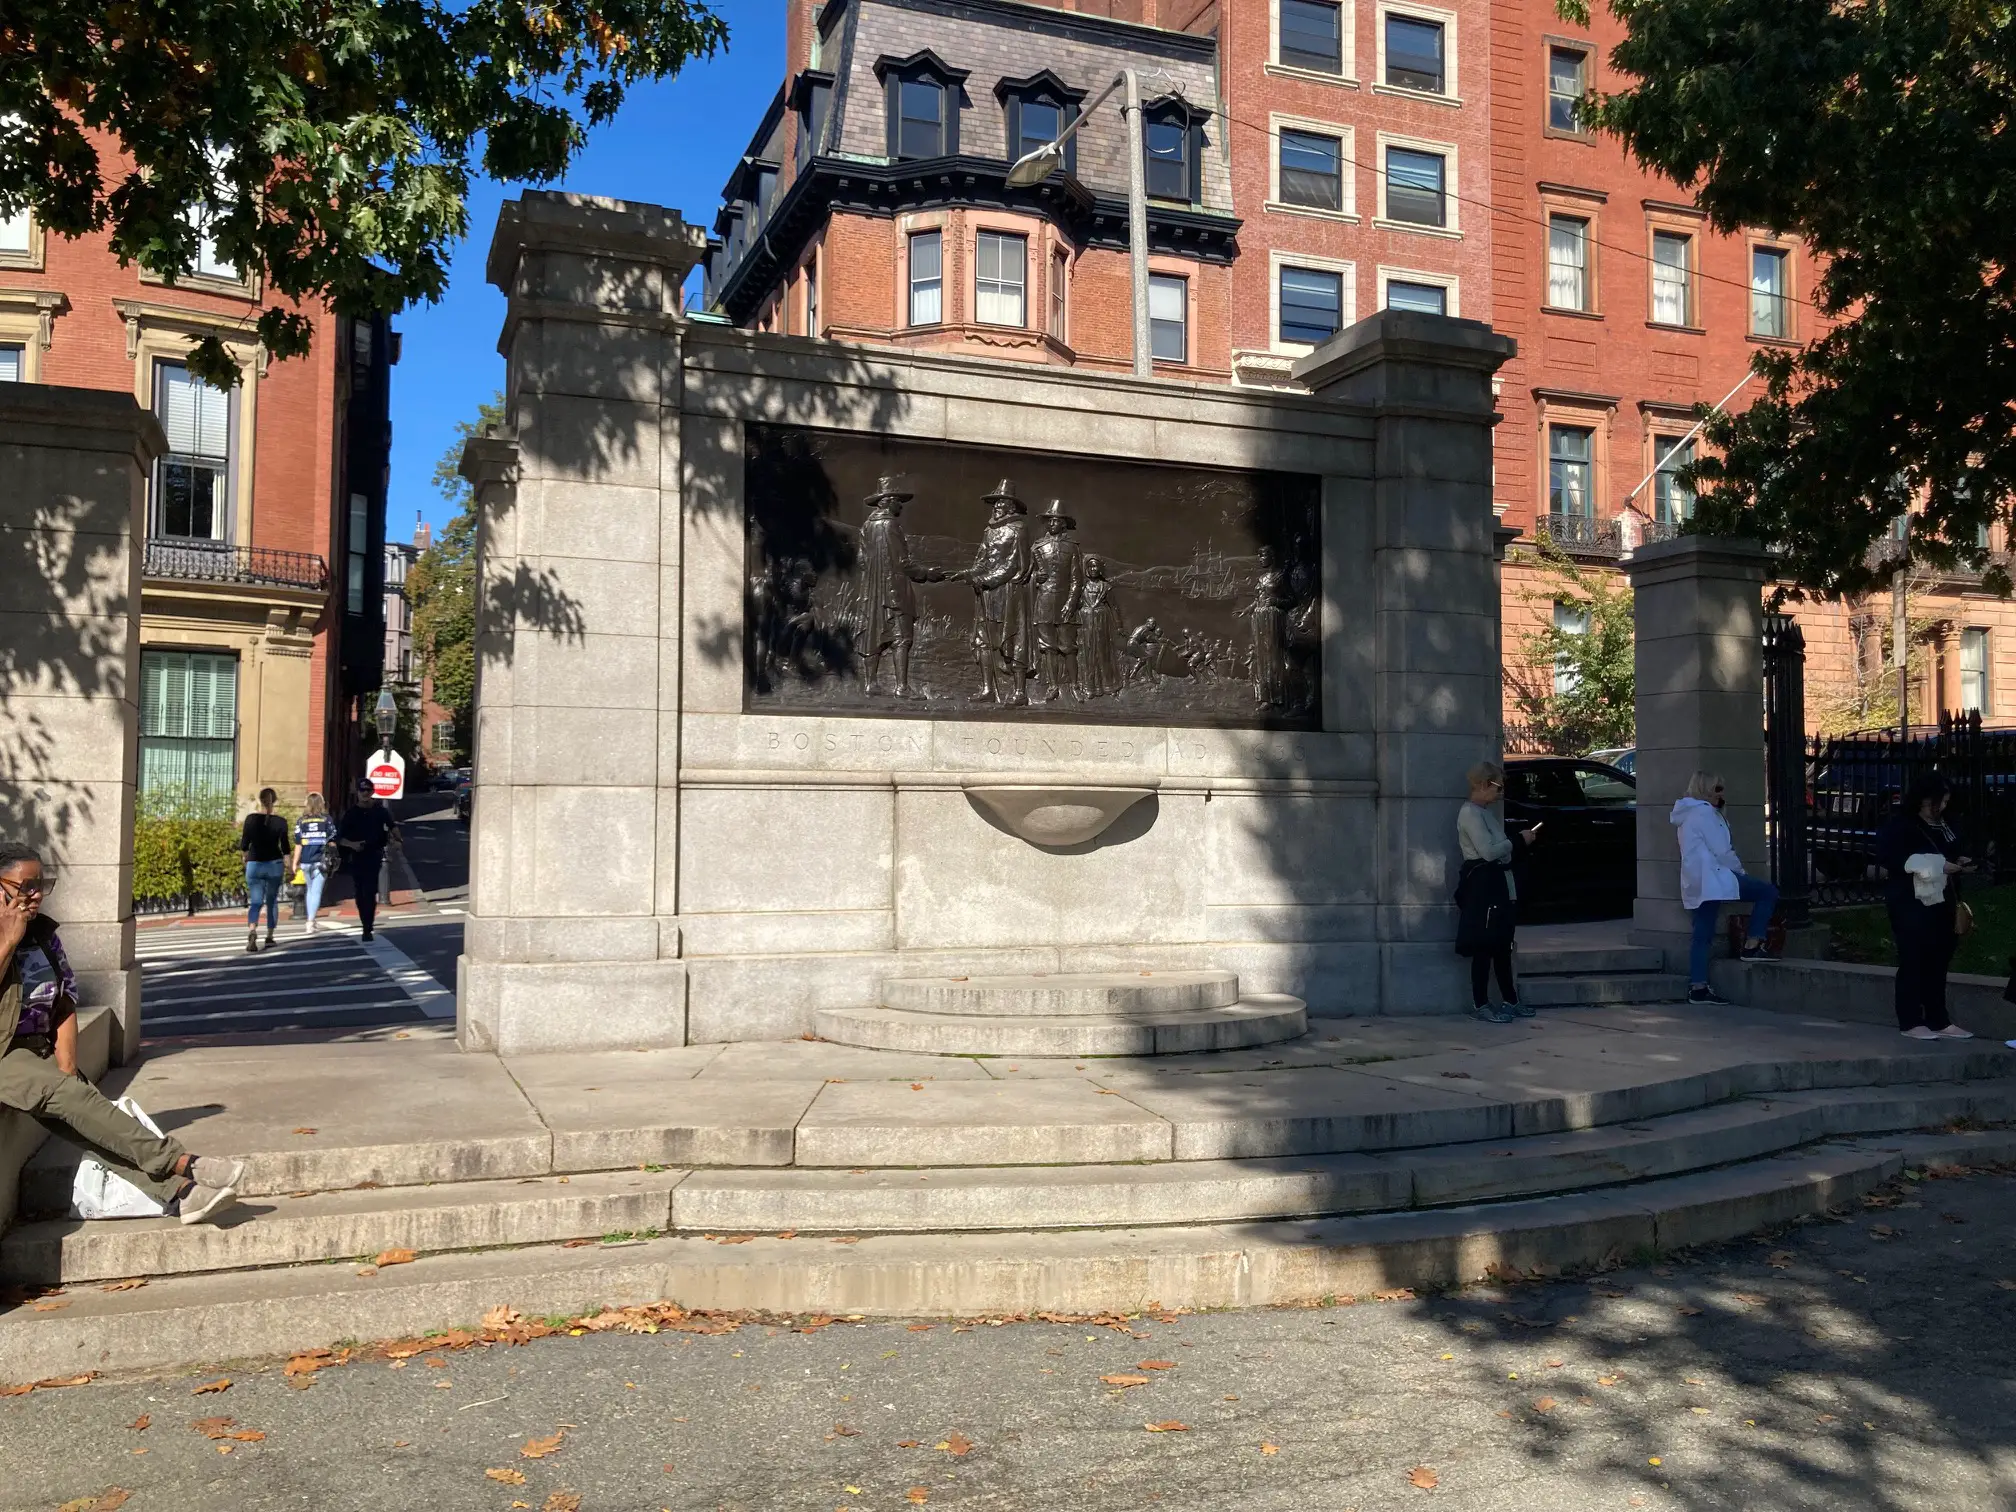 Boston common founded